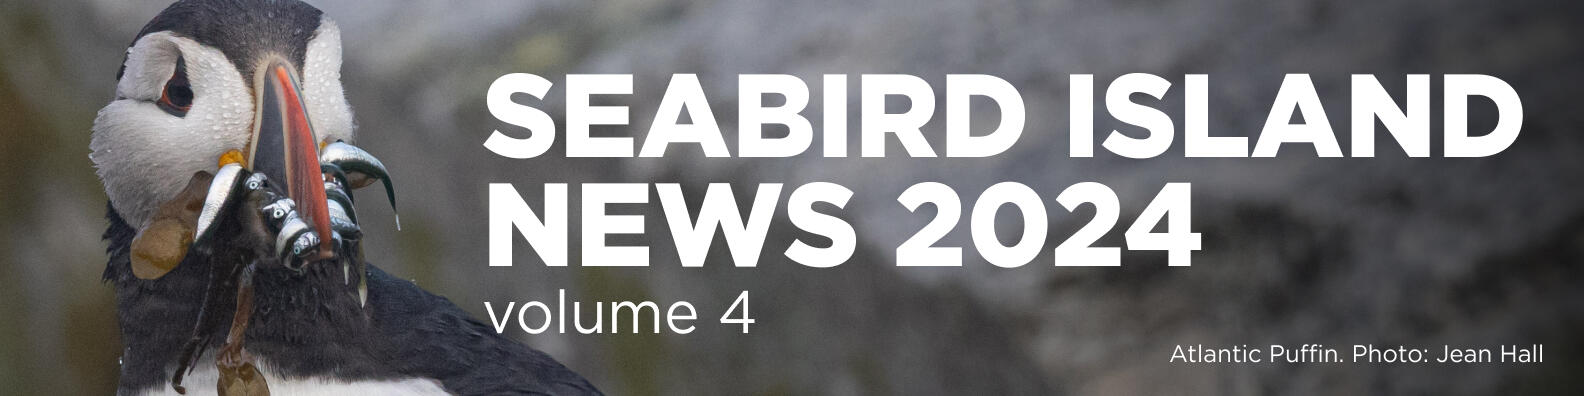 Seabird Island News Banner - Volume 04